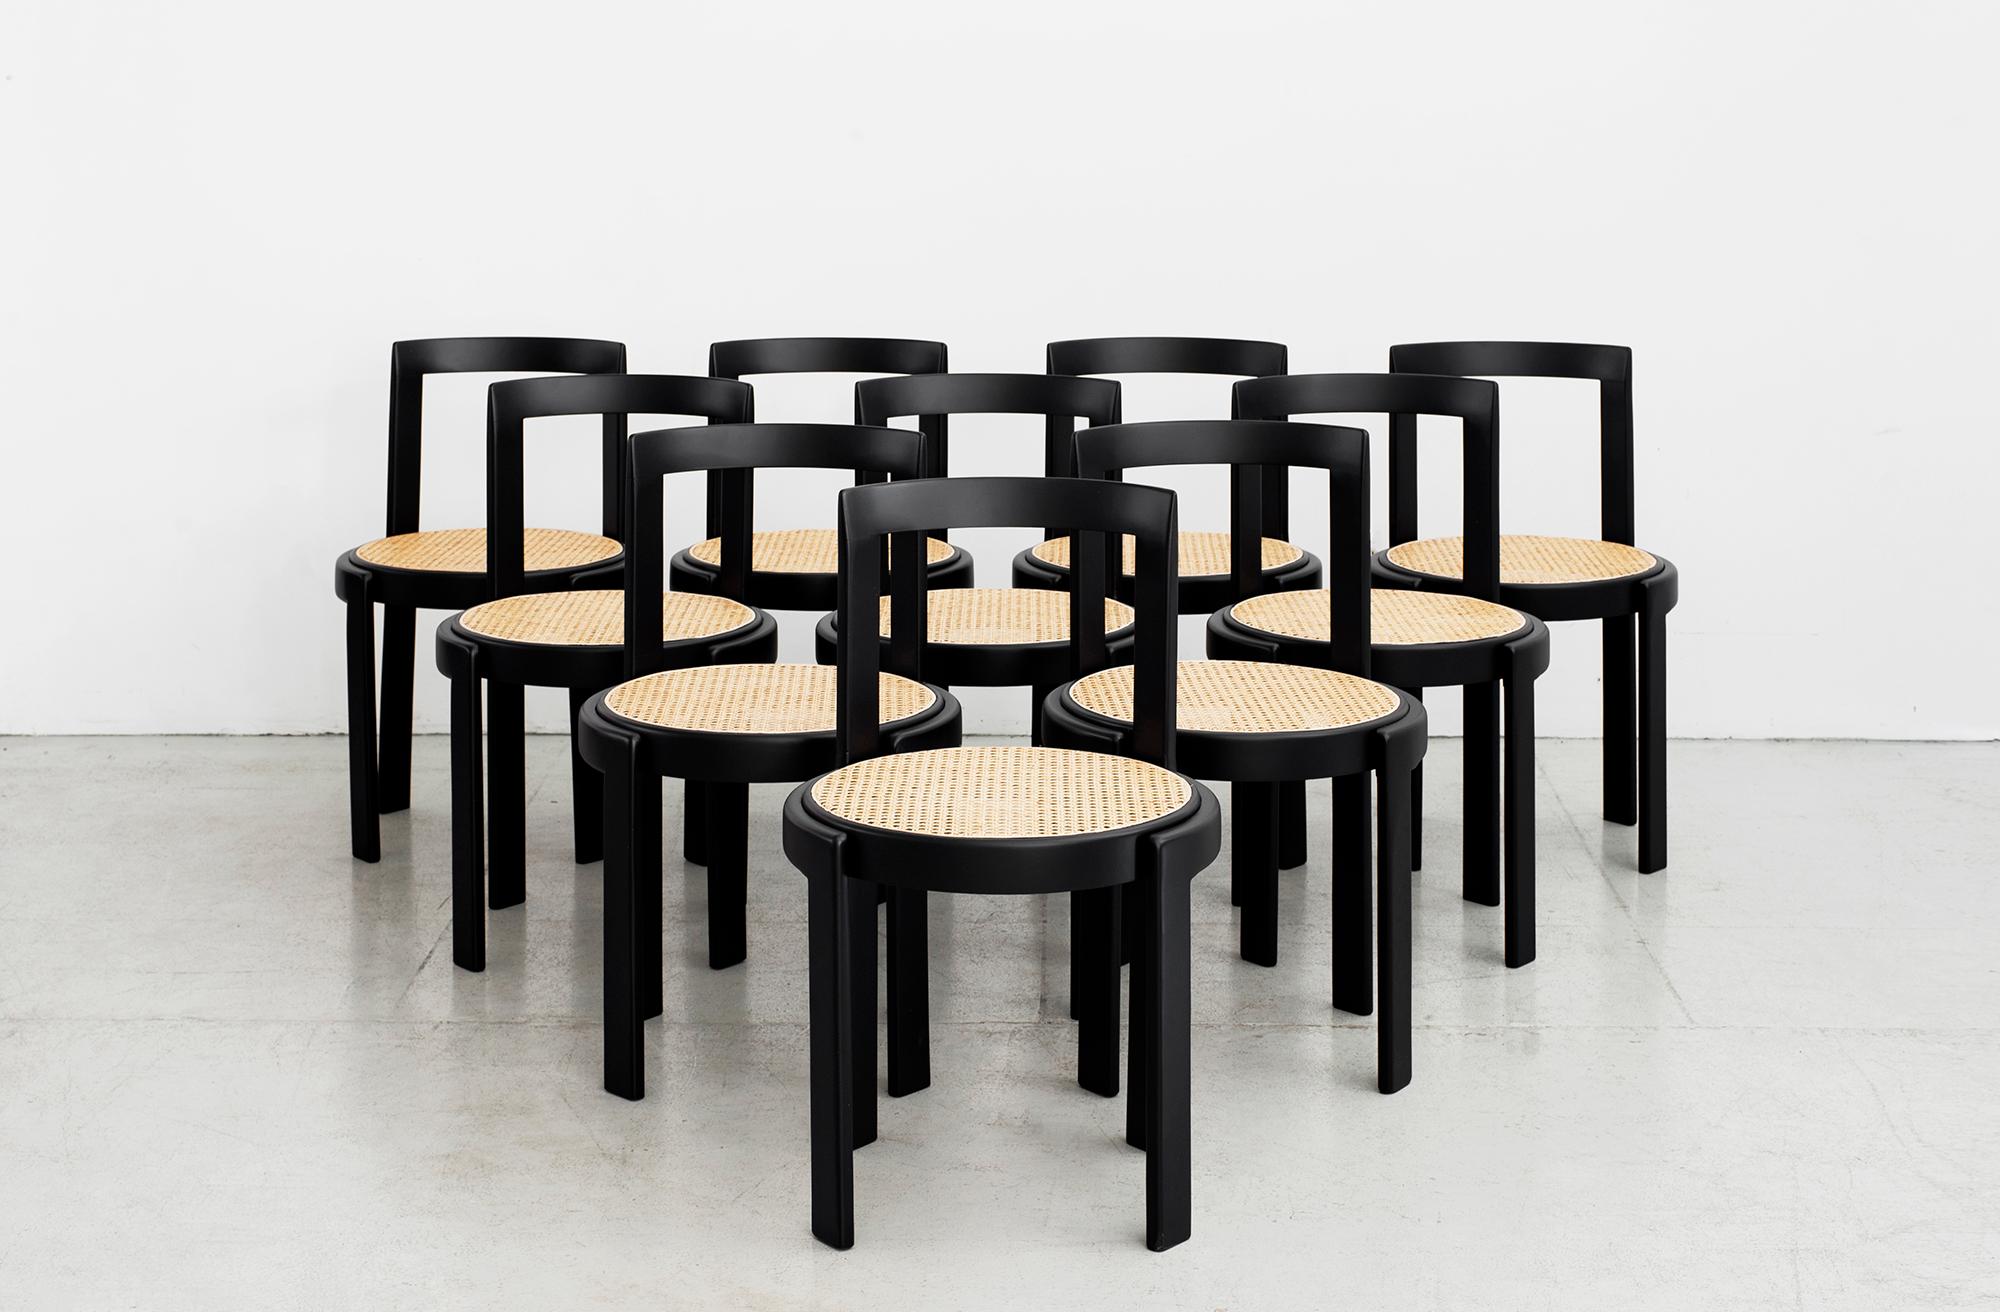 Fantastic set of 10 Italian bentwood dining chairs
Newly caned seat
Refinished in black ebony finish.
   